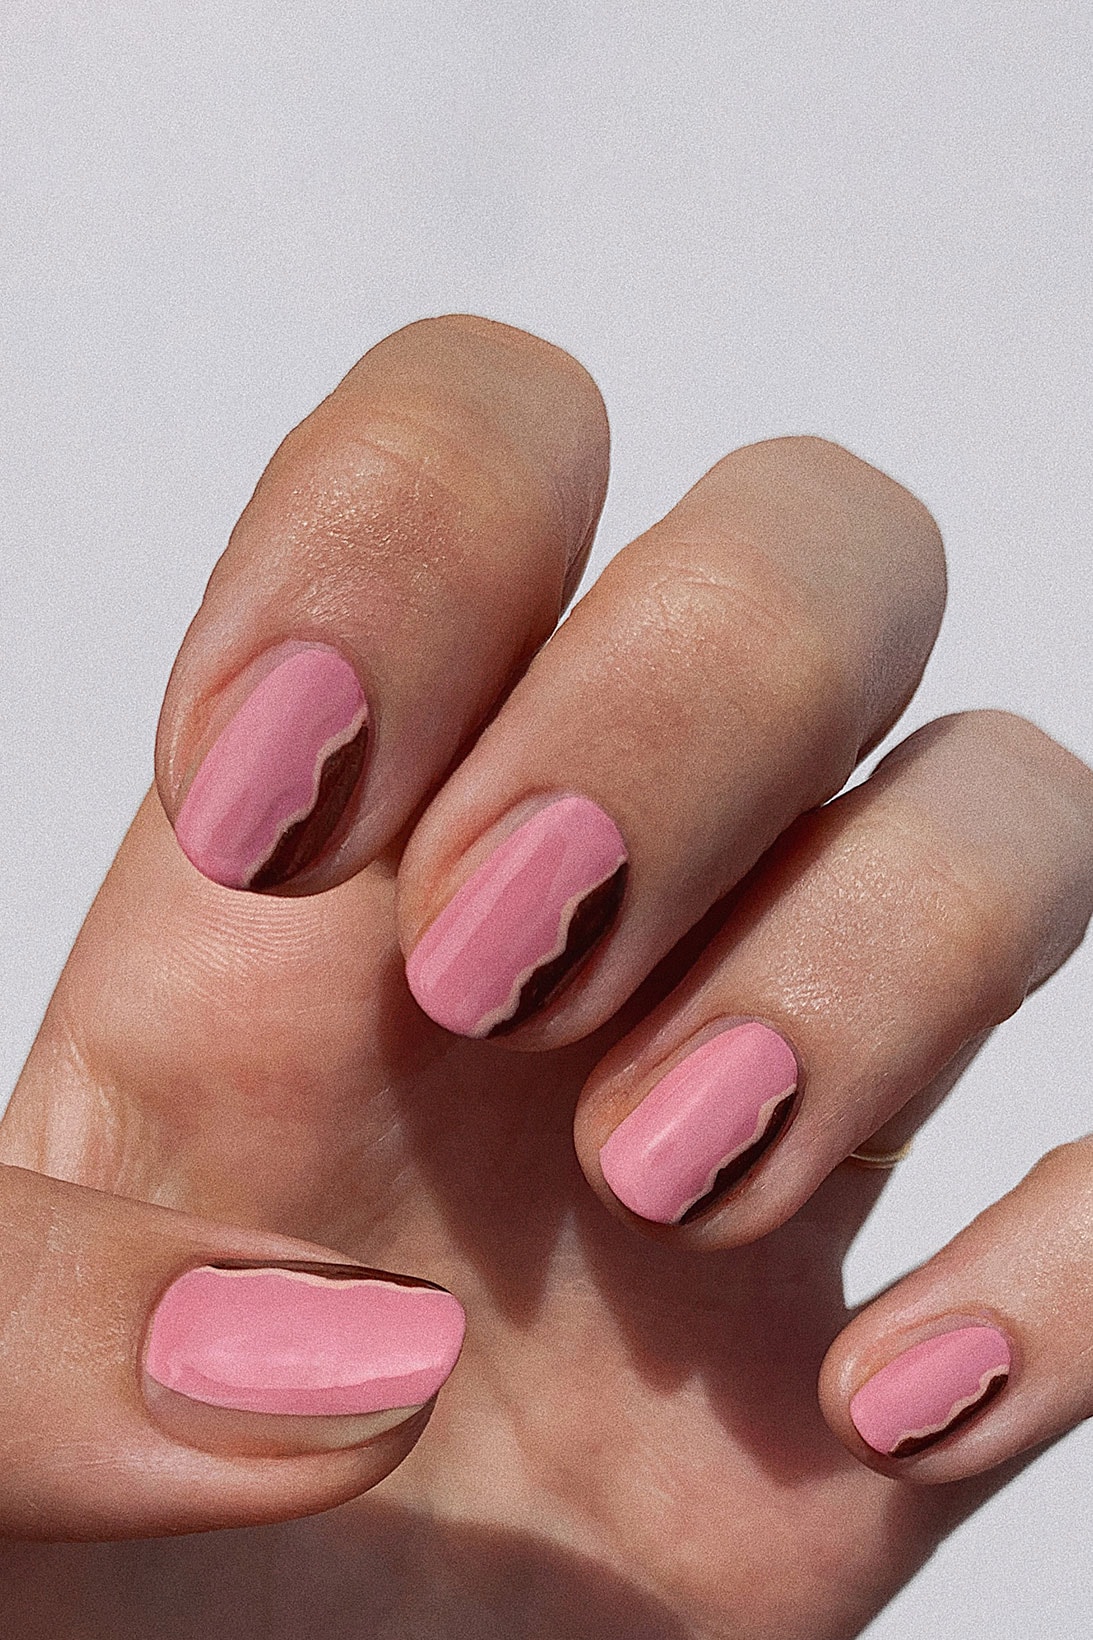 gelcream essie yana sheptovetskaya nails nail polish art design inspiration summer pool beach hands 